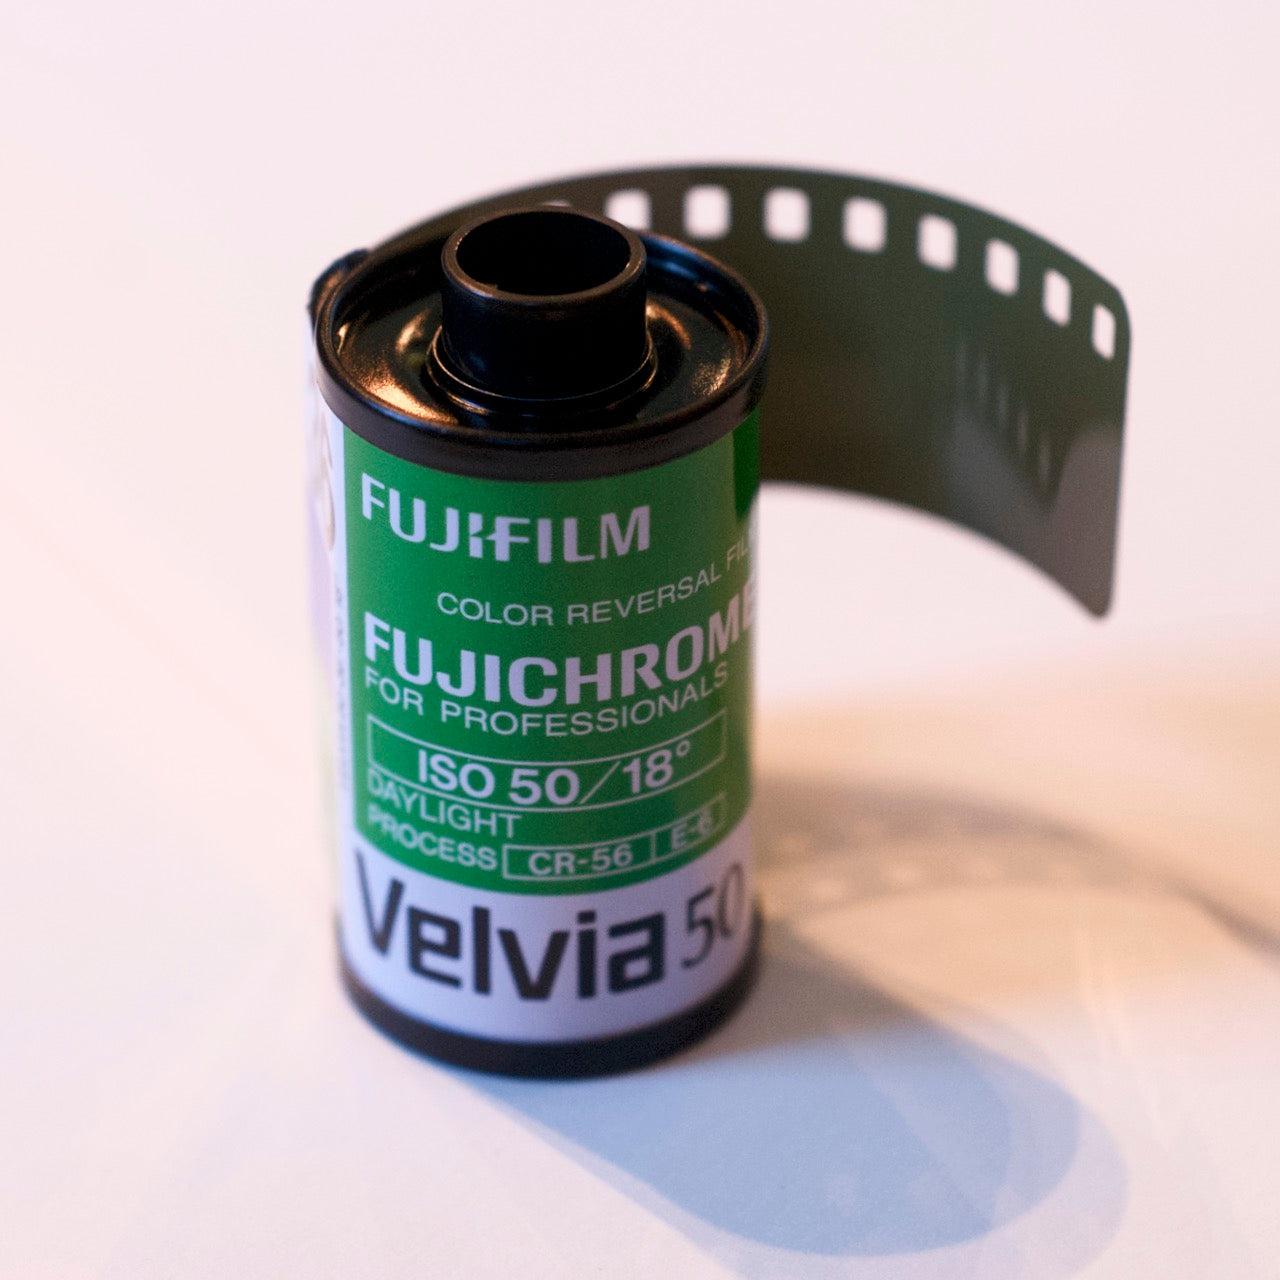 Fujichrome Velvia 50 135/36 (expired)